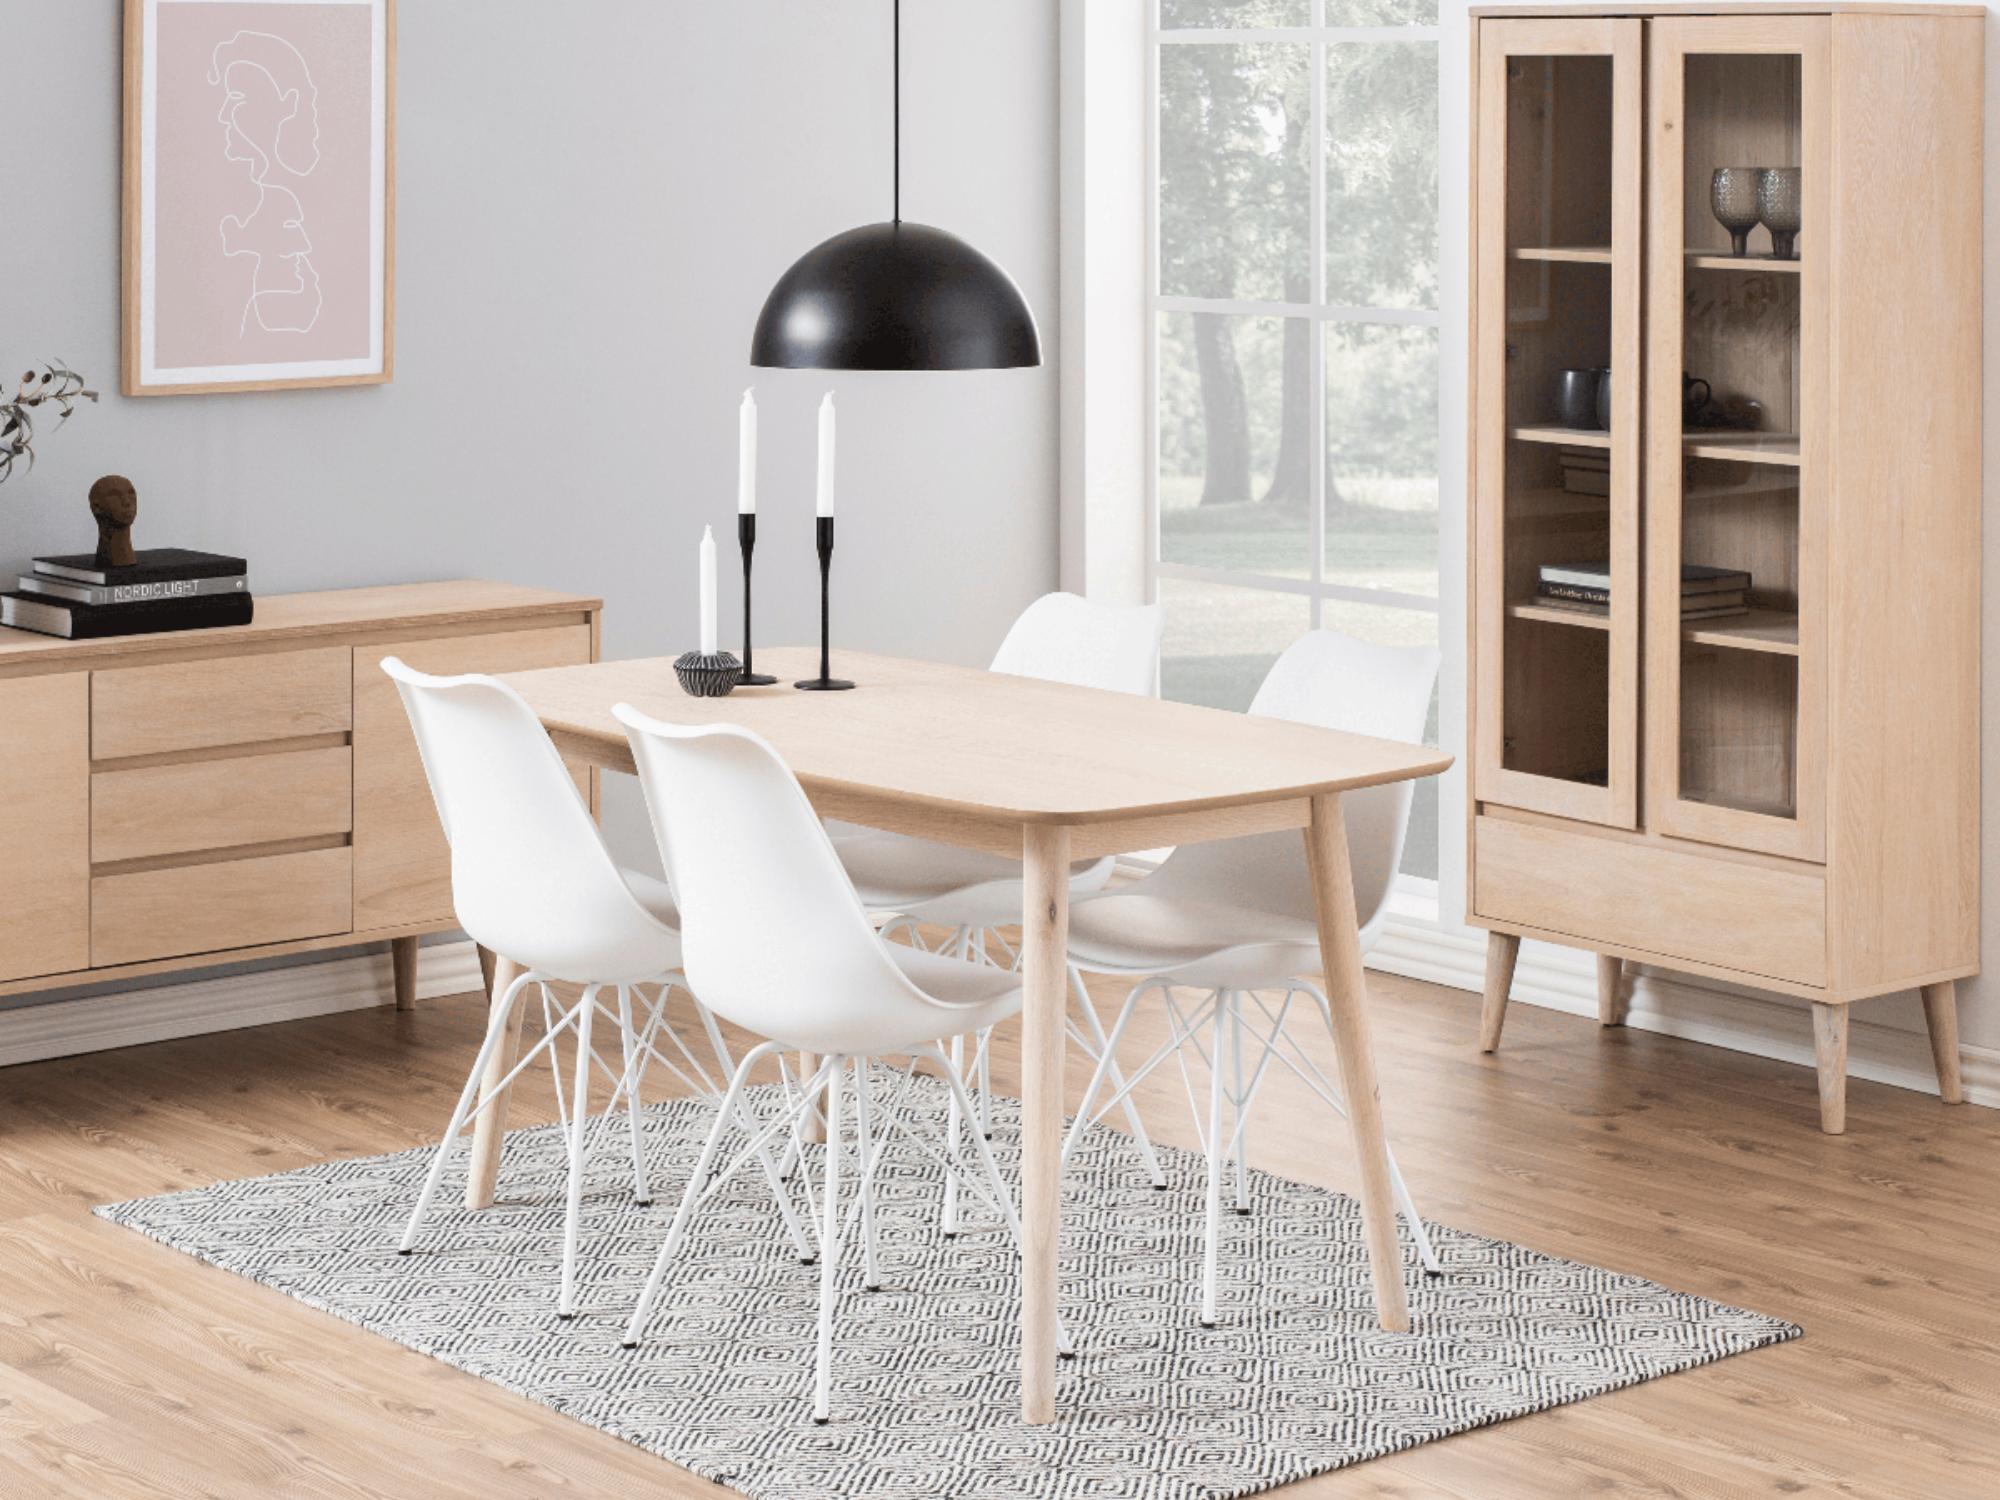 Trend Alert: Danish Design Furniture